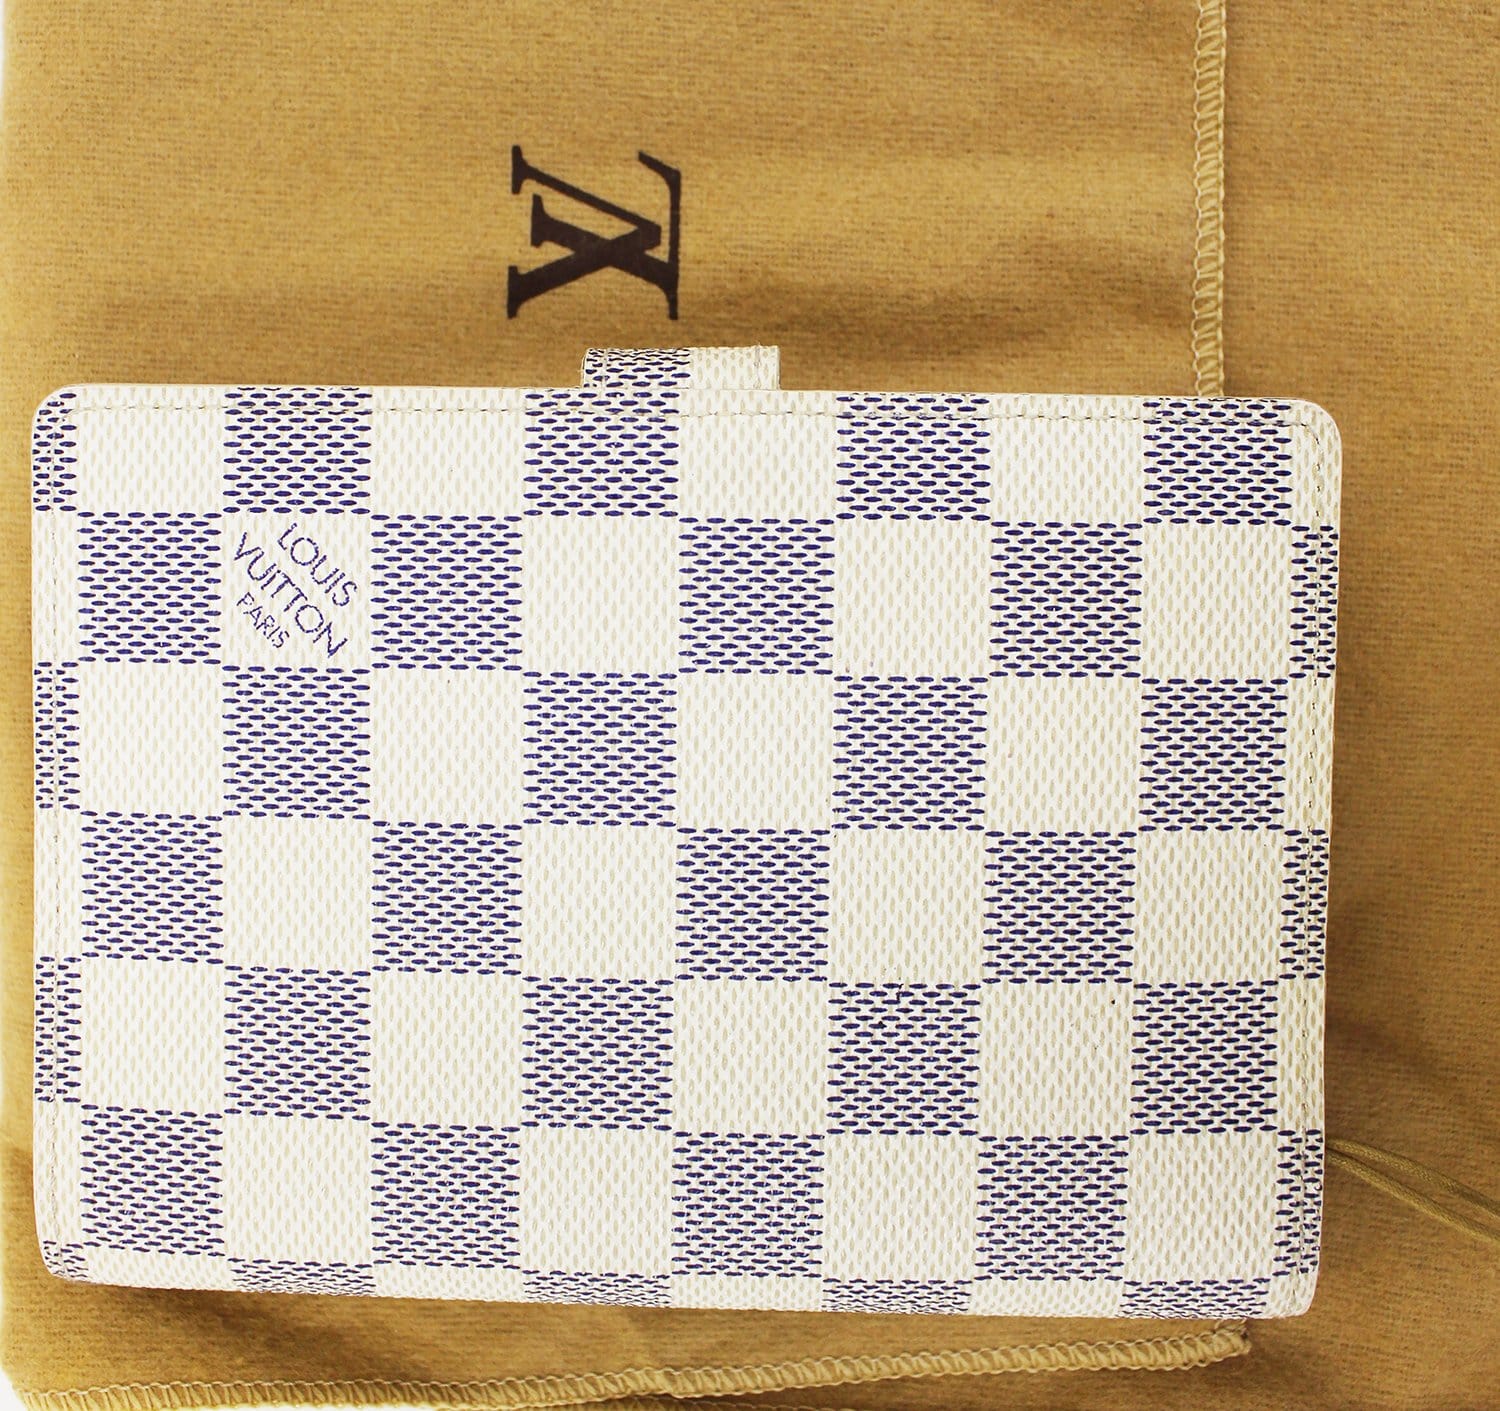 Louis Vuitton Damier Azur Agenda PM Notebook Diary Cover LV 6 Holes